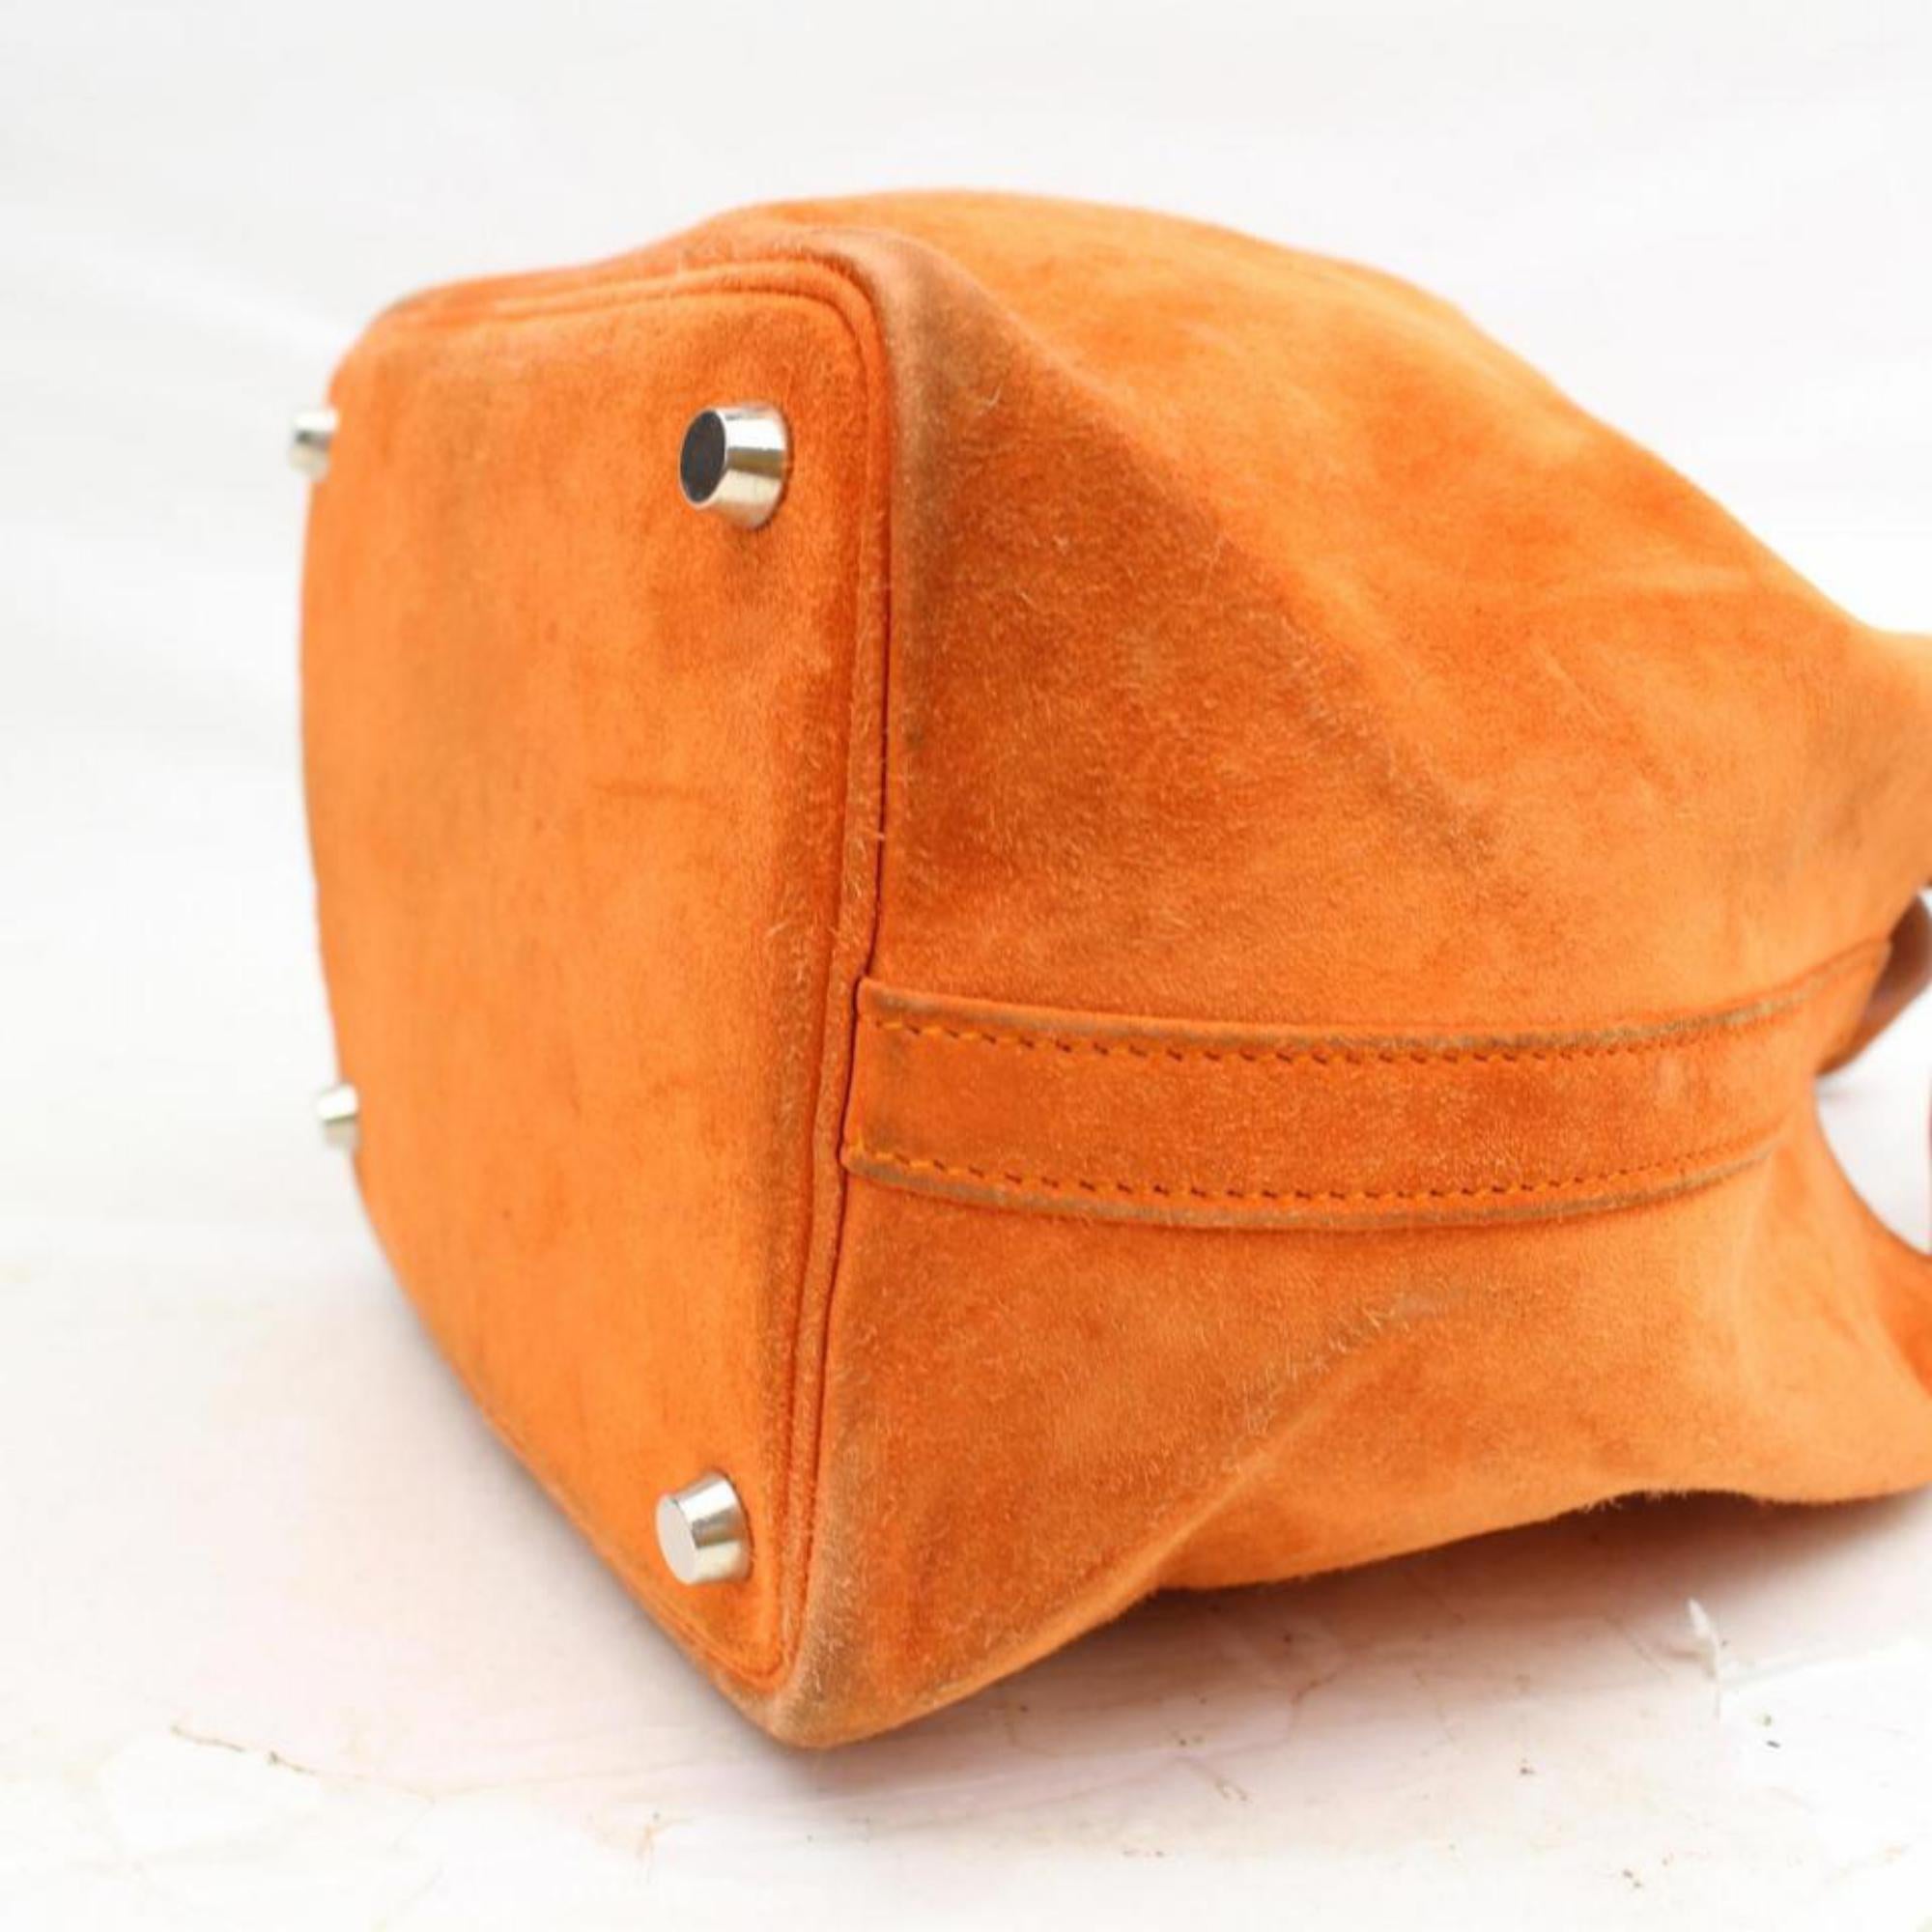 Hermès Picotin 18 Pm 868694 Orange Suede Leather Tote For Sale 6